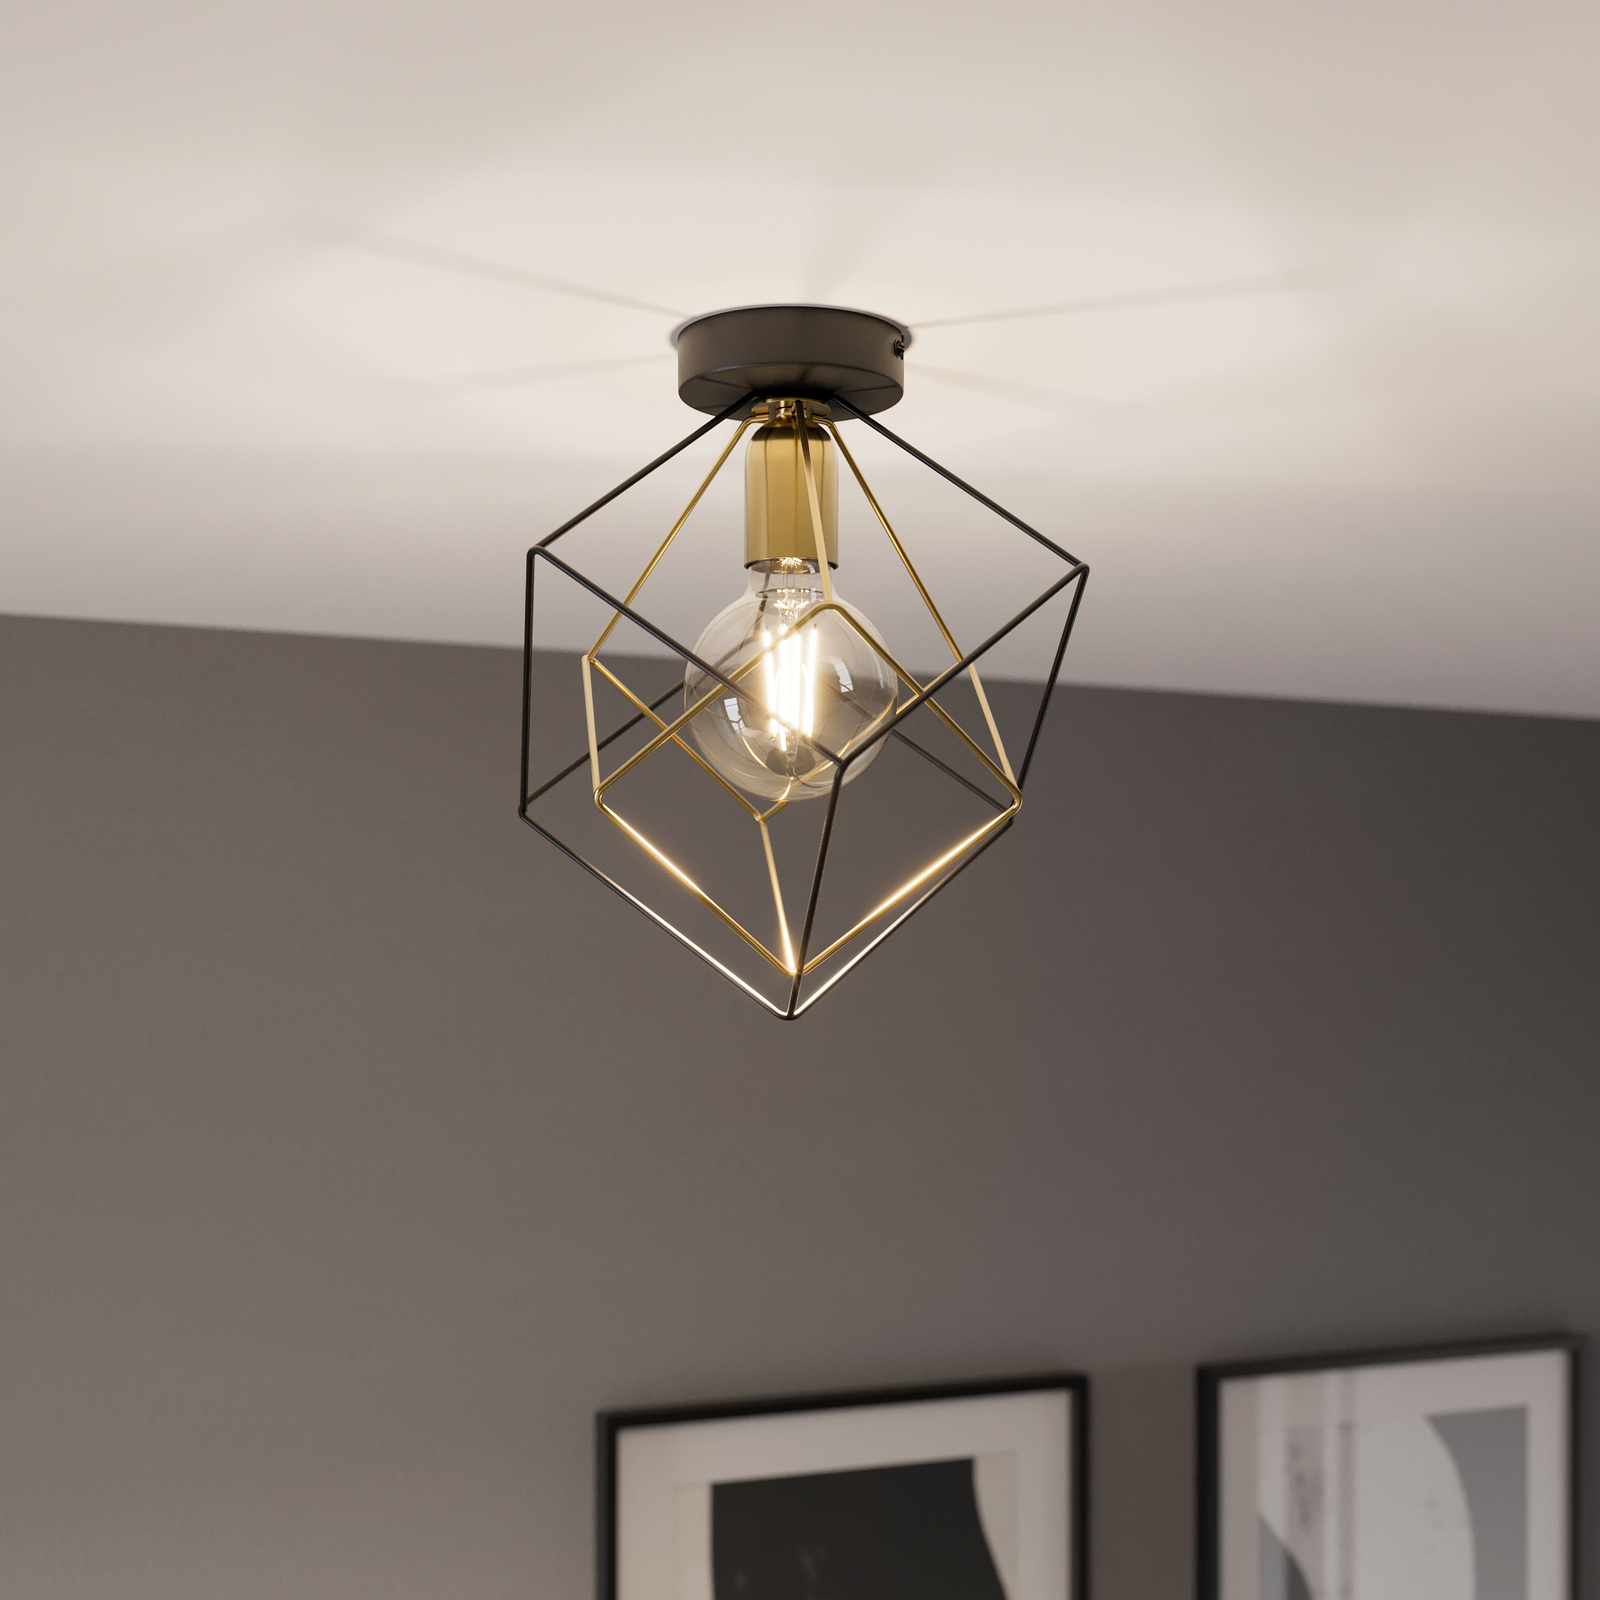 Alambre ceiling light 1-bulb, gold/black